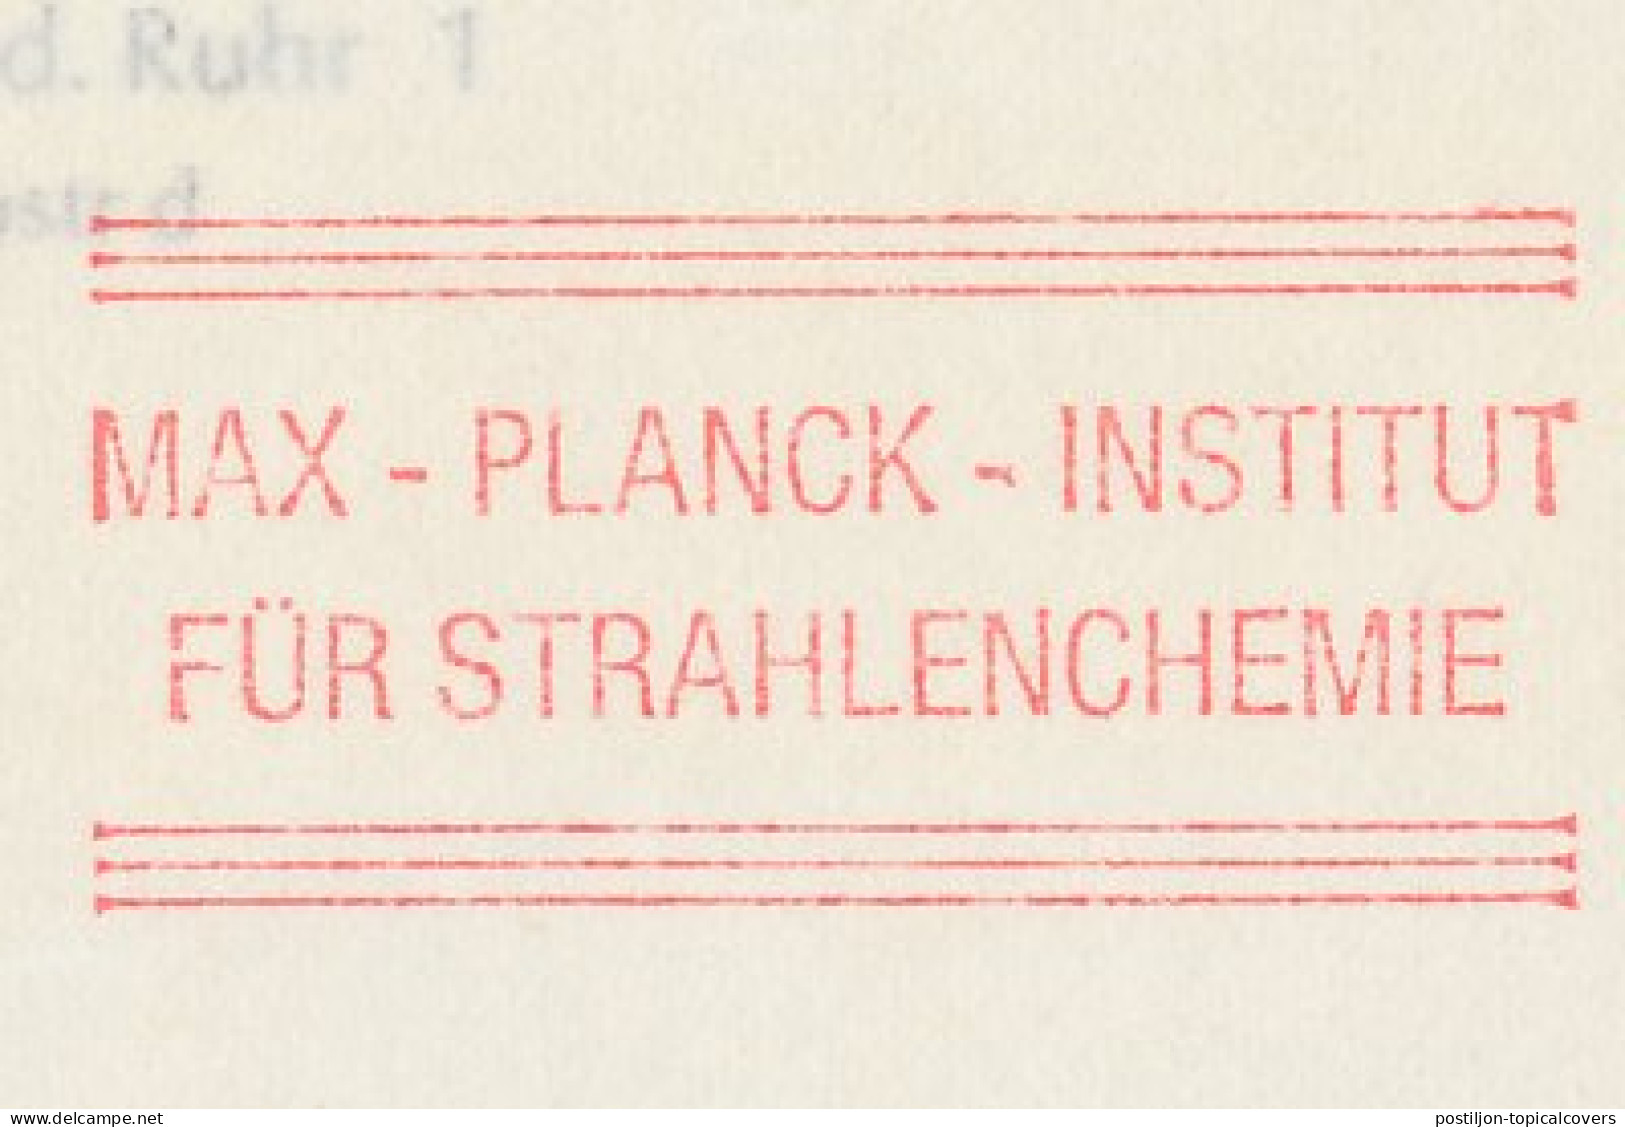 Meter Top Cut Germany 1984 Max Planck - Radiation Chemistry - Chemistry